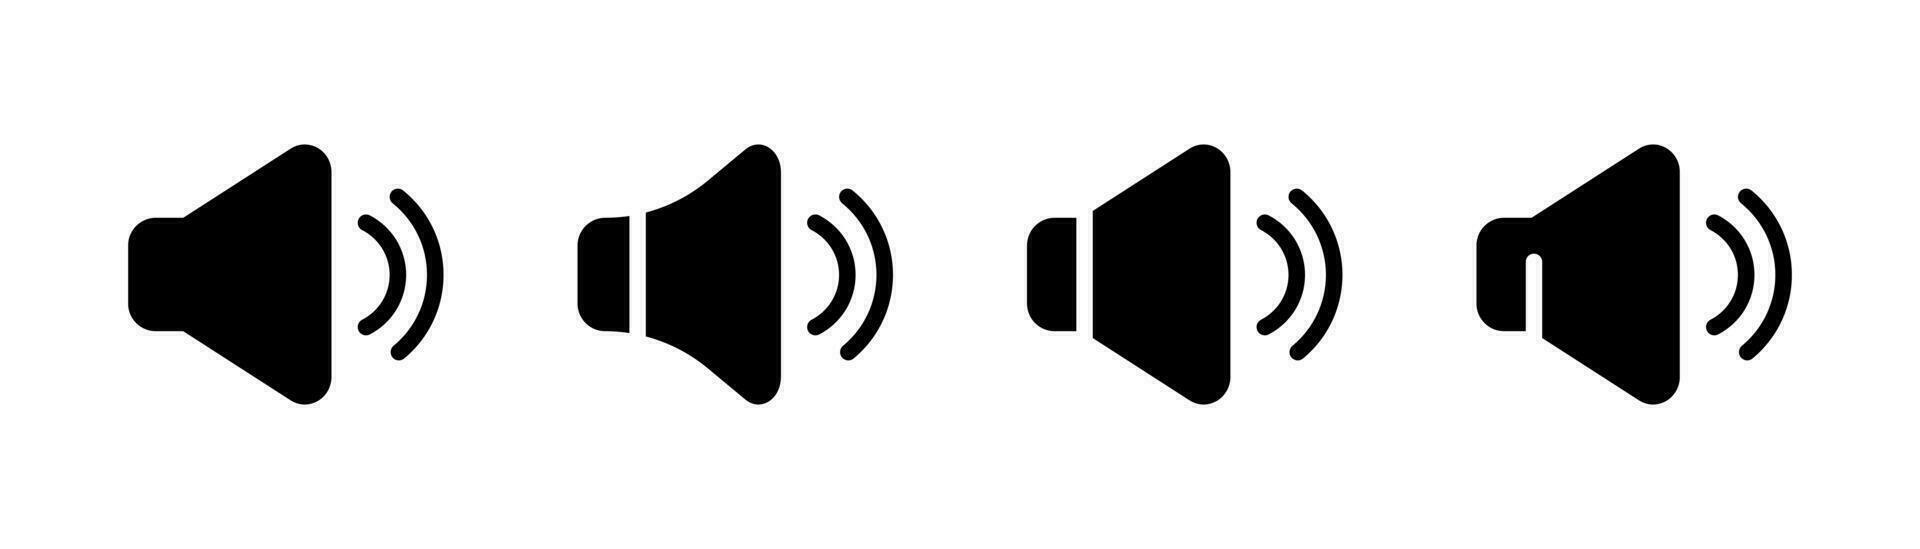 Speaker icon in glyph. Sound symbol. Megaphone icons set. Speaker sign. Loudspeaker symbol. Megaphone icon in black. Stock vector illustration